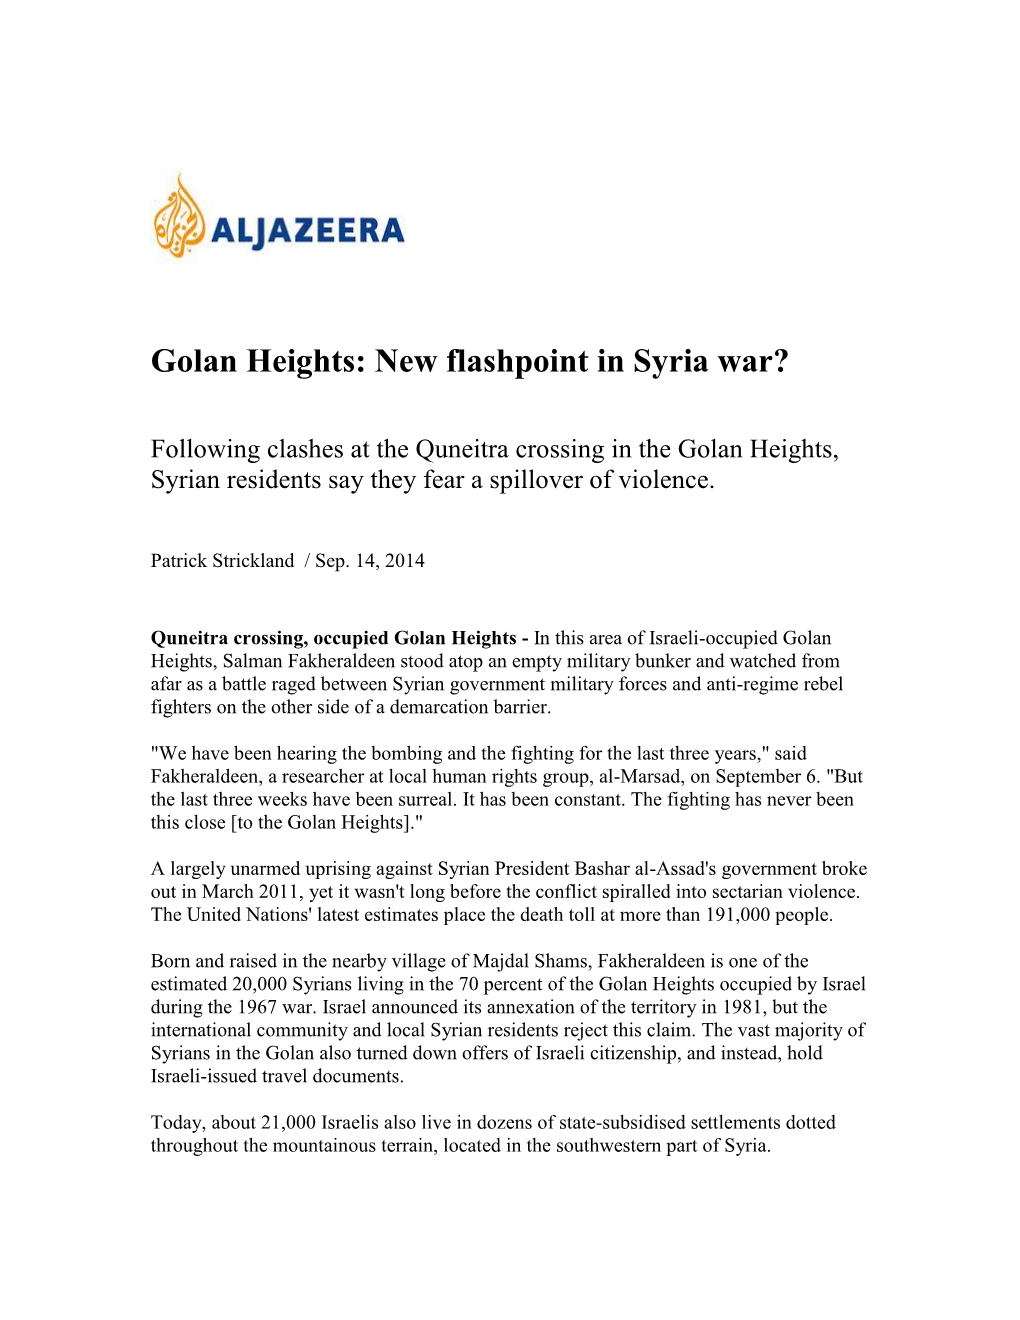 Golan Heights: New Flashpoint in Syria War?